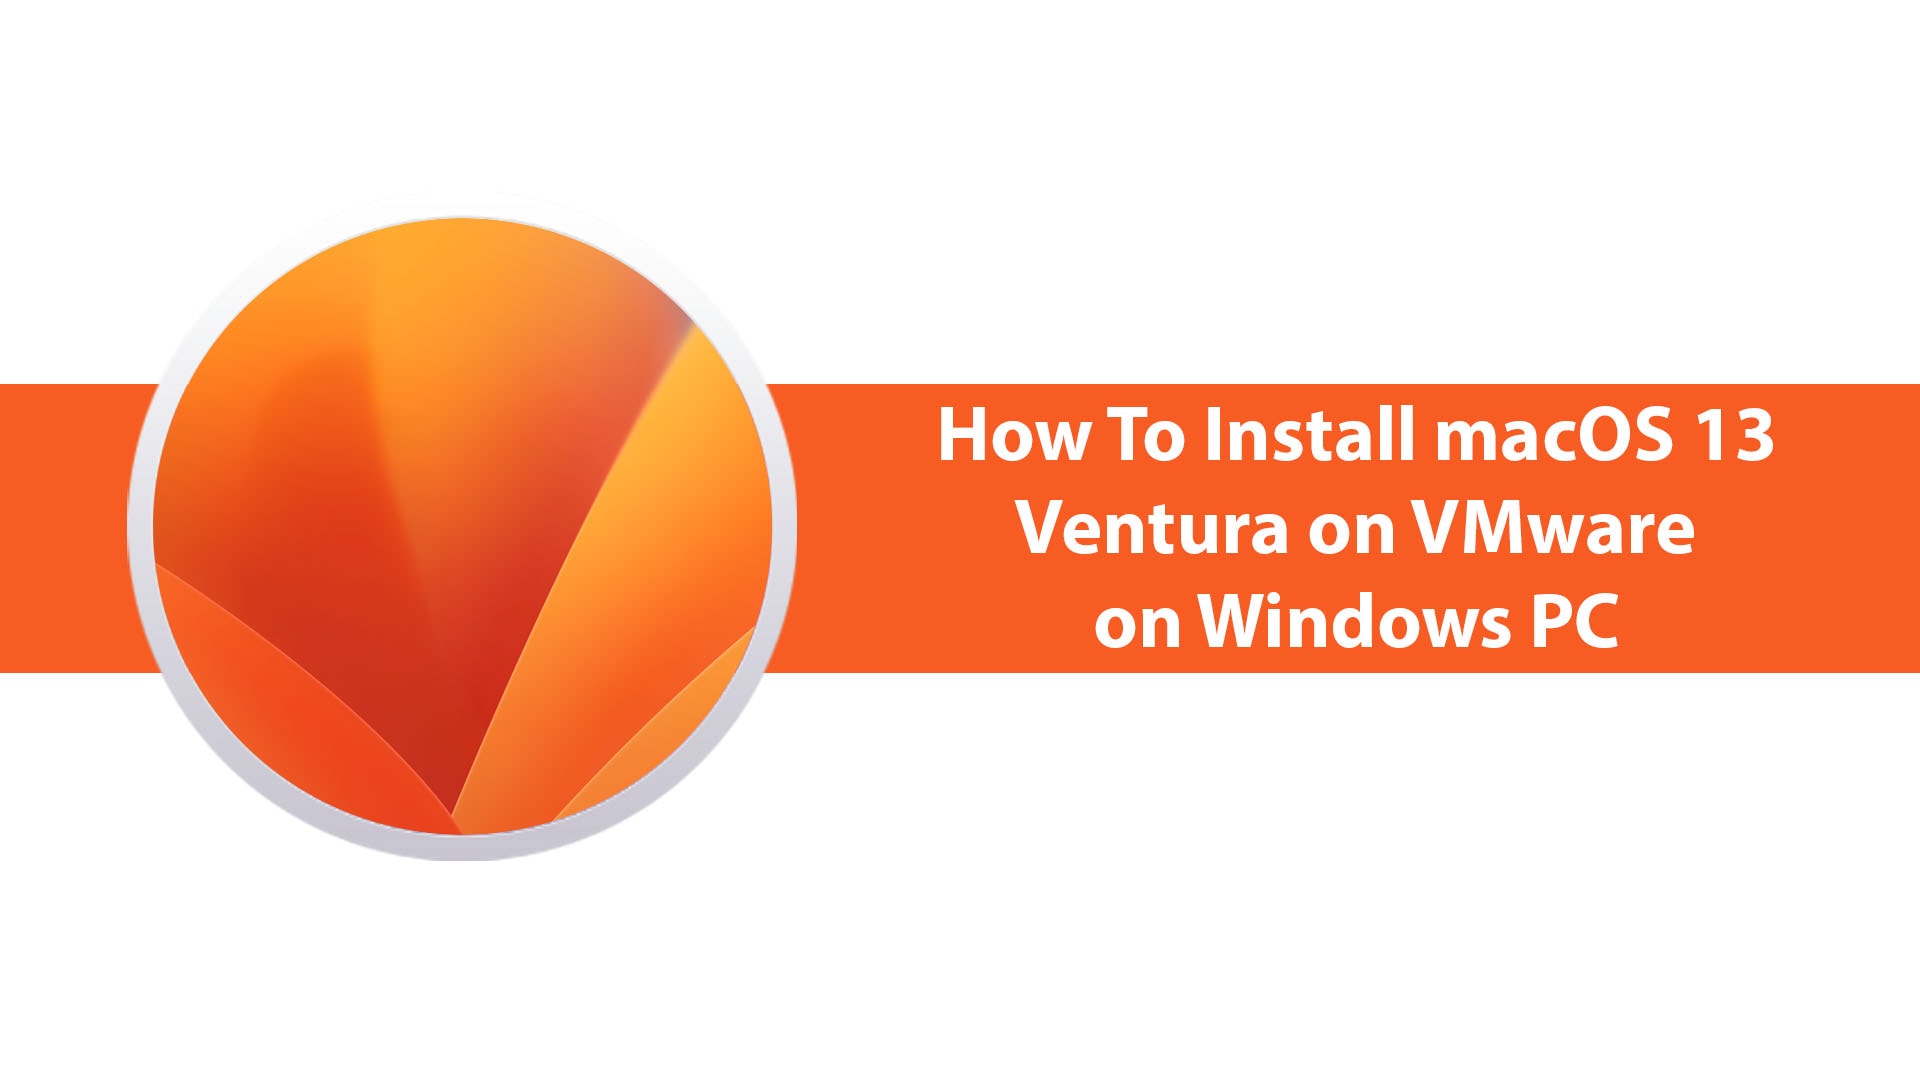 How to Install macOS 13 Ventura on VMware on Windows PC